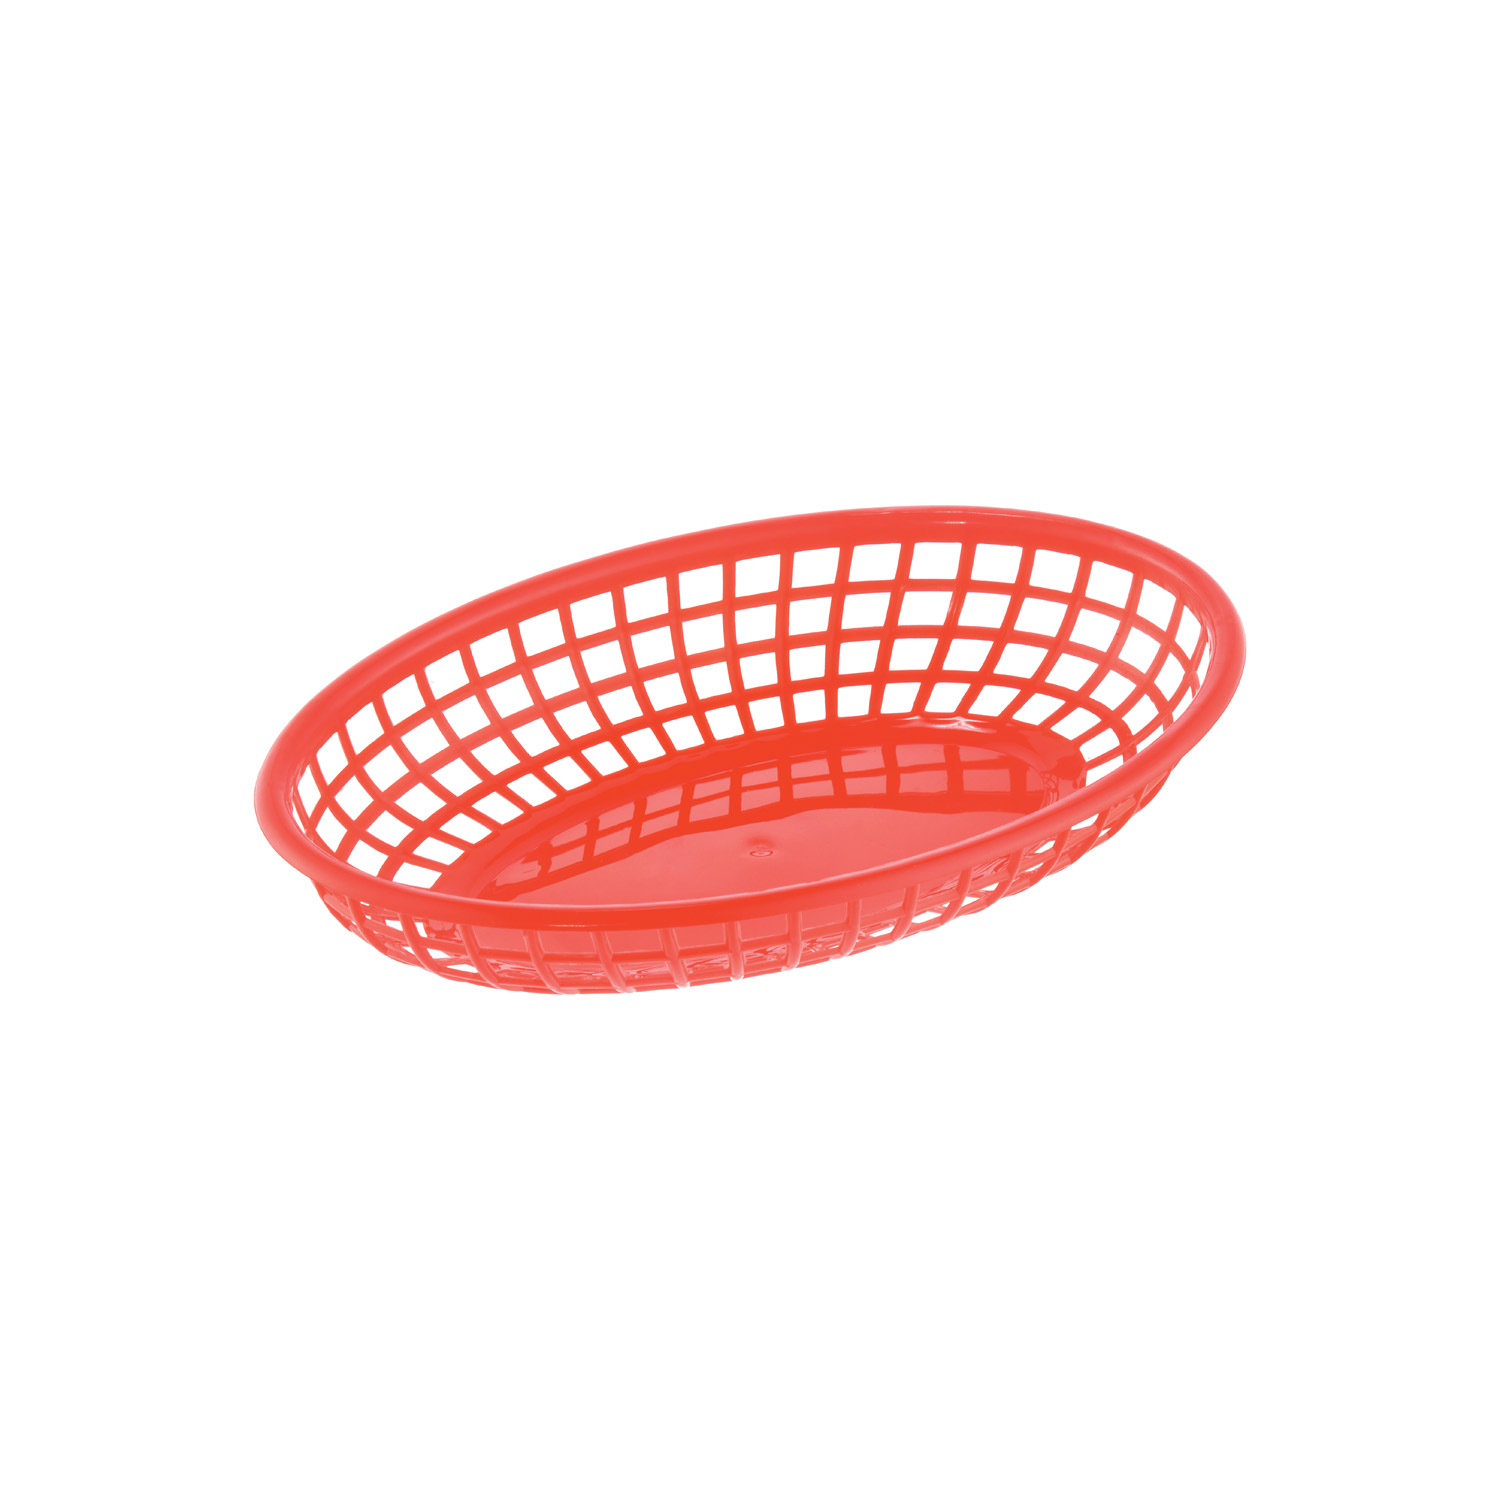 CAC China TTFB-09RD Red Plastic Oval Fast Food Basket 9 1/4" L - 1 dozen